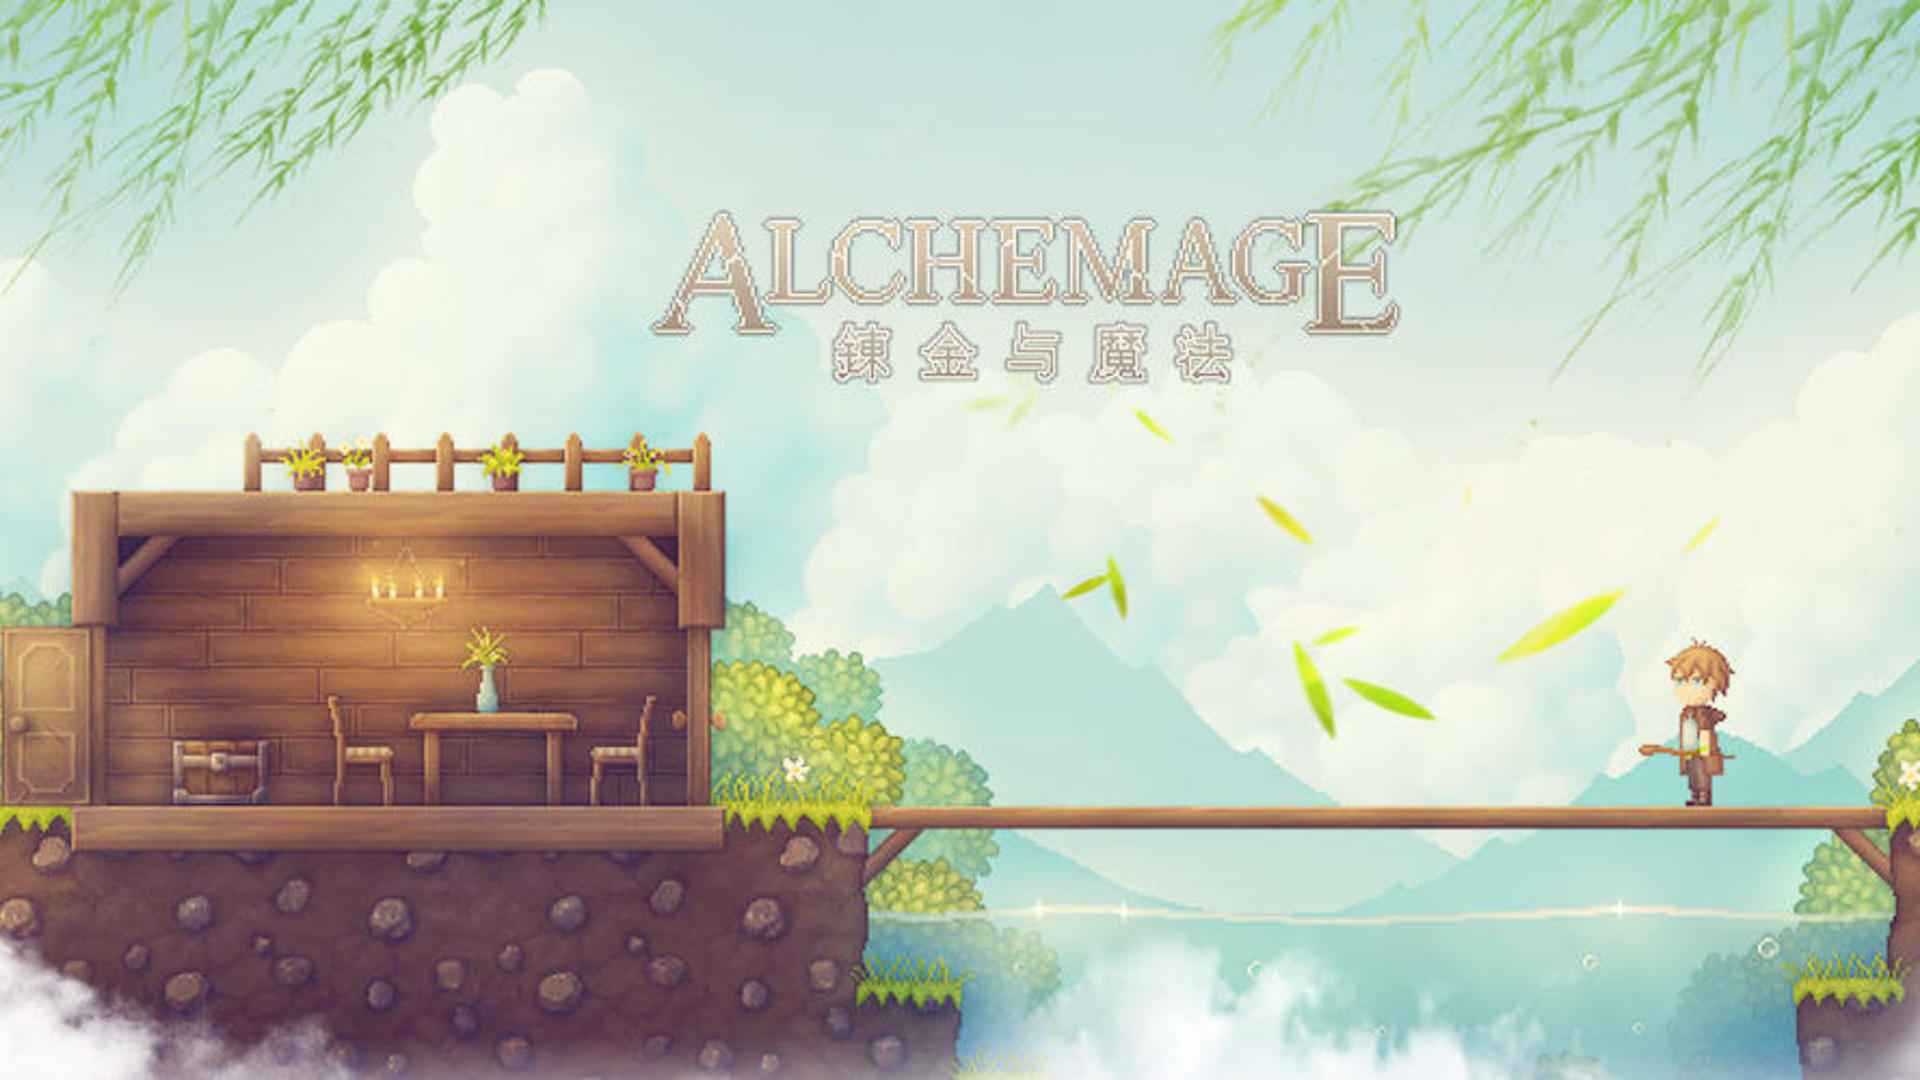 Banner of Alchimie et magie 